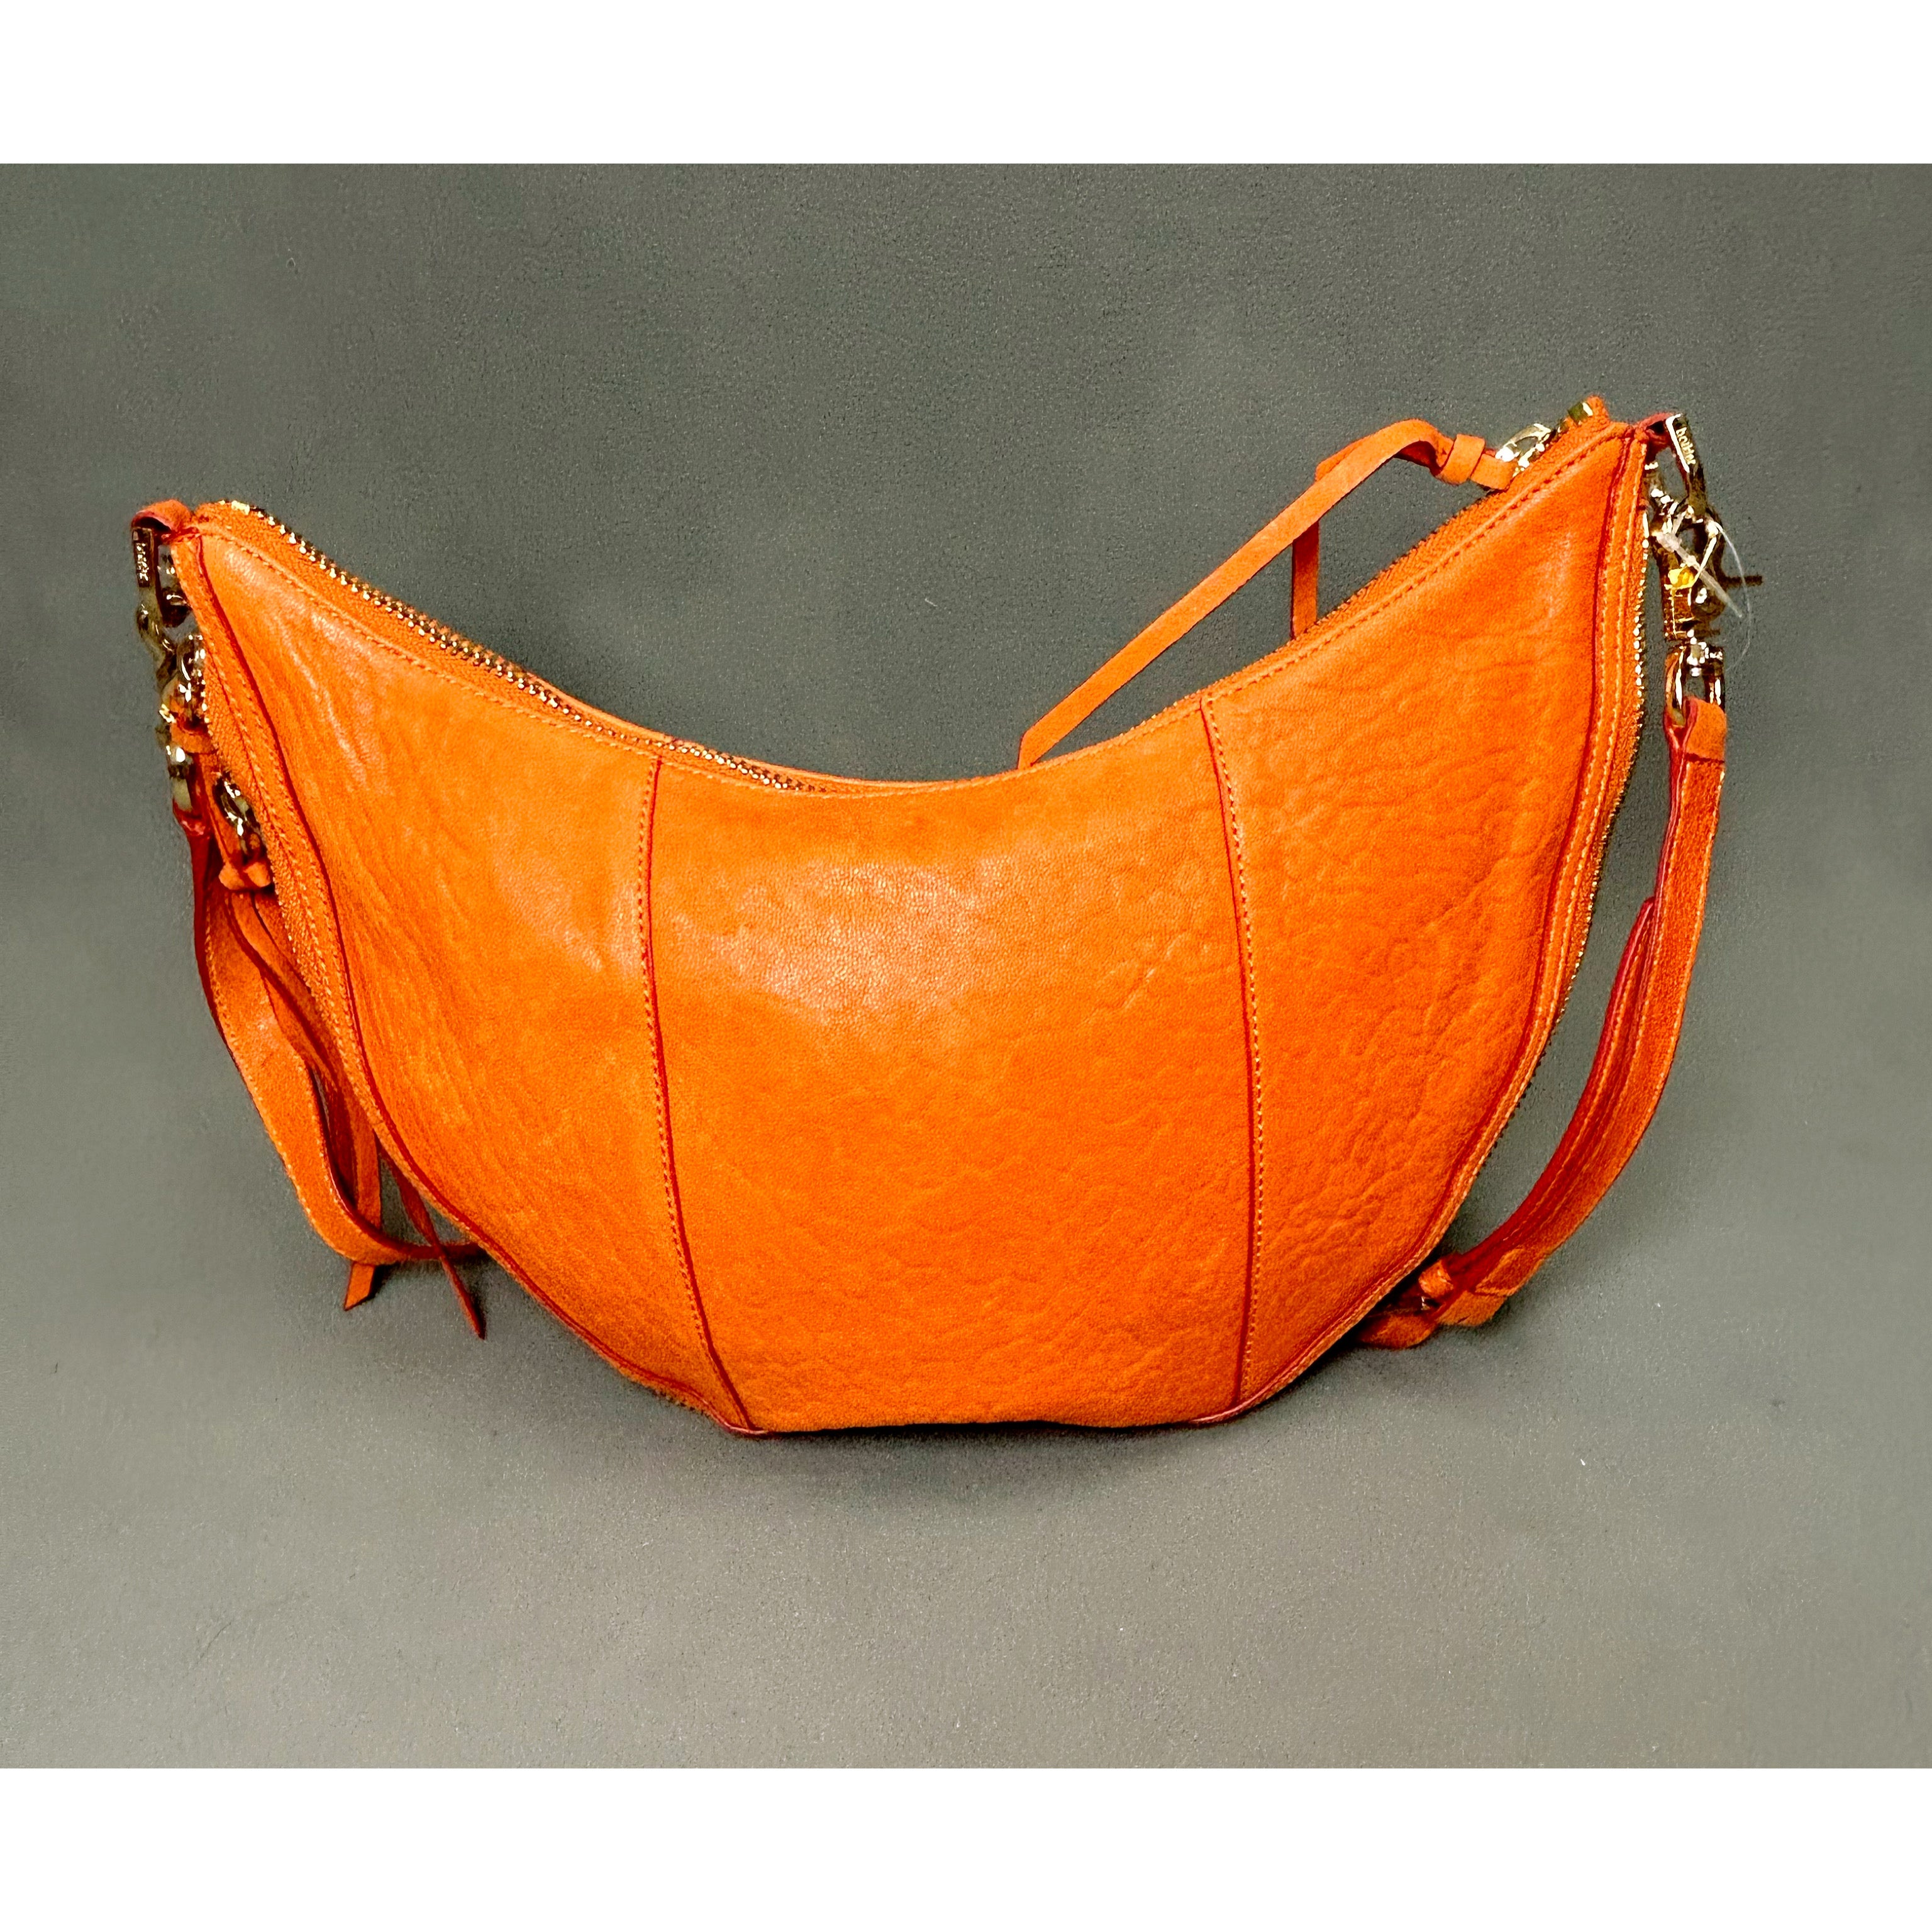 Botkier orange leather bag, BEAND NEW!